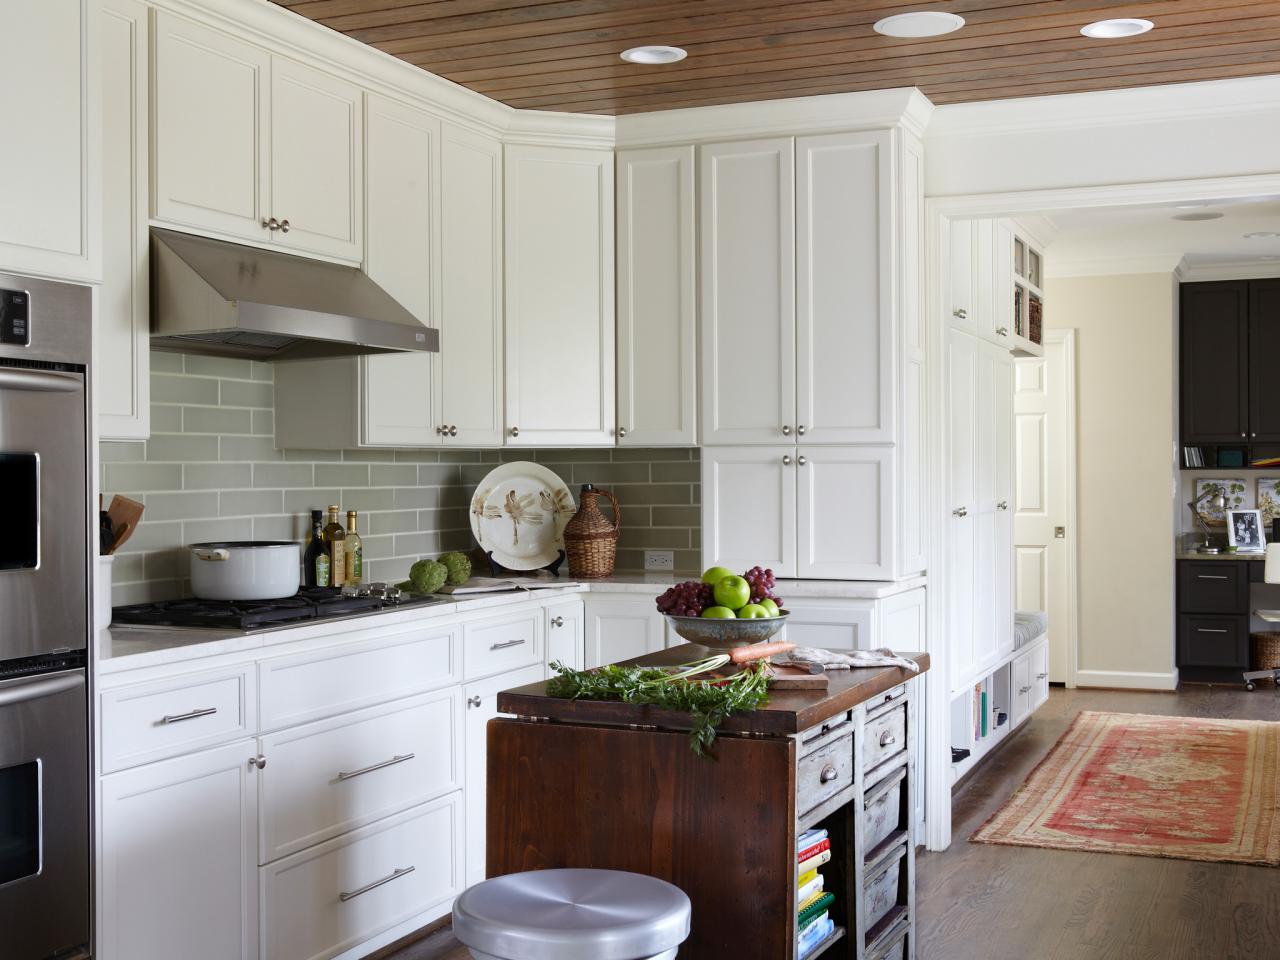 What are semi-custom kitchen cabinets?